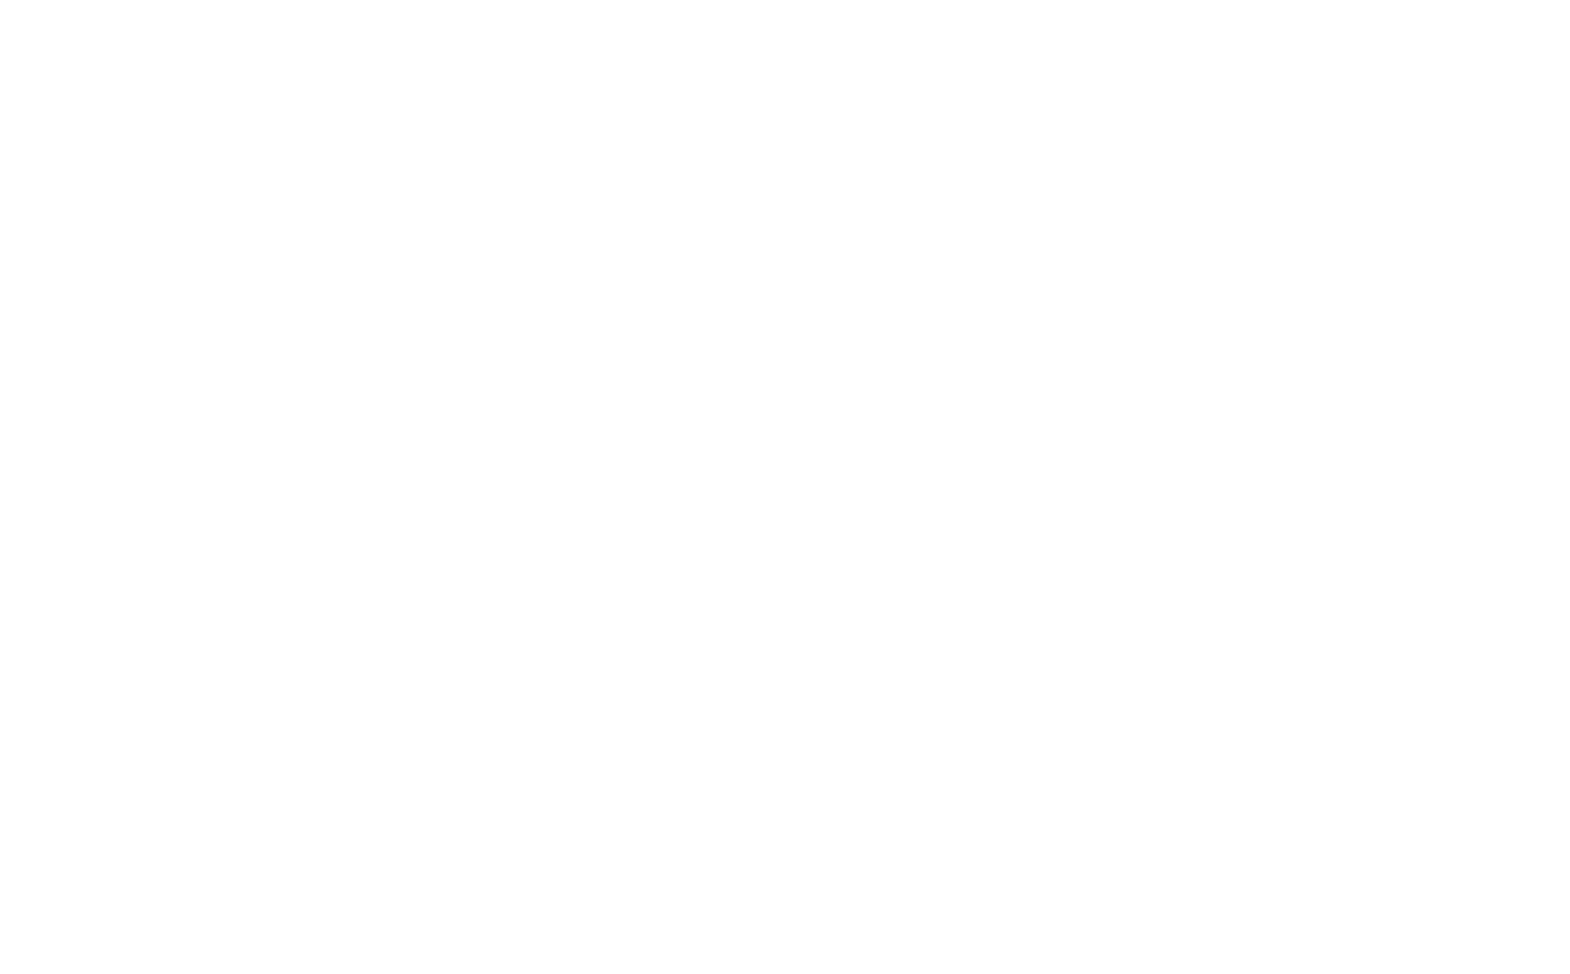 Zscaler logo pour fonds sombres (PNG transparent)